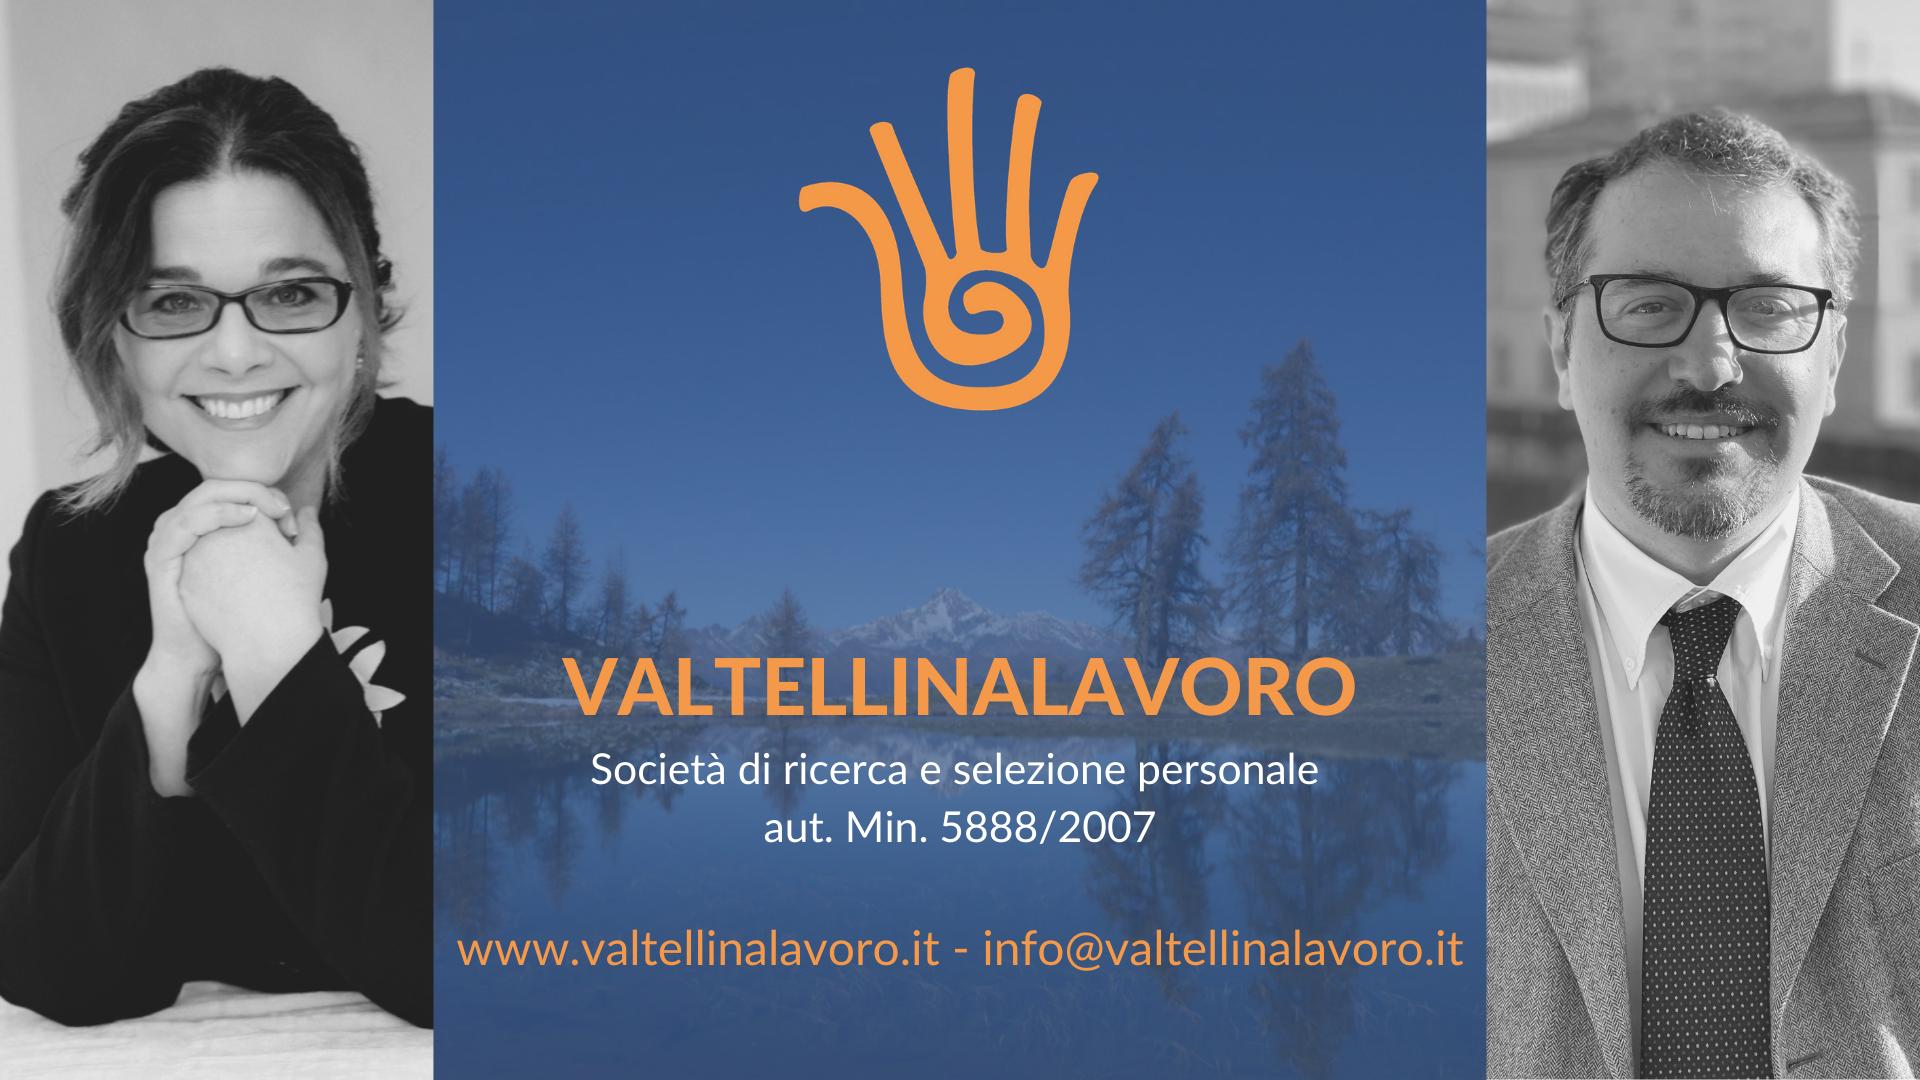 (c) Valtellinalavoro.it